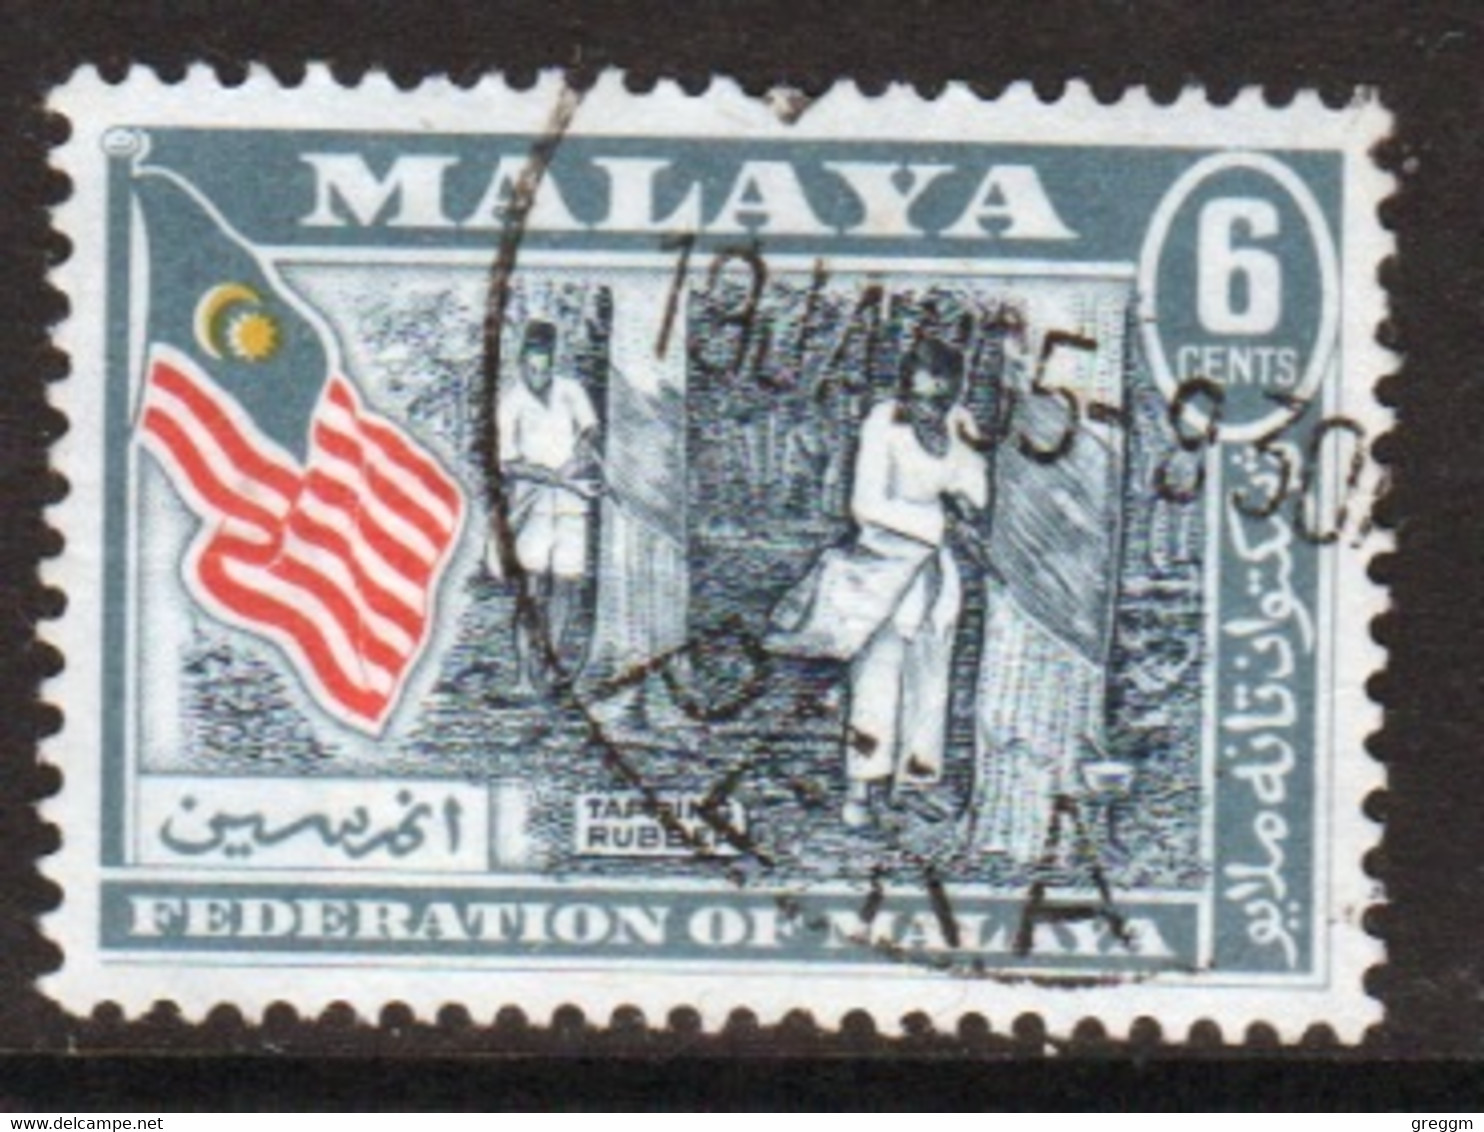 Malayan Federation 1957 Single 6c Stamp In Fine Used - Federation Of Malaya